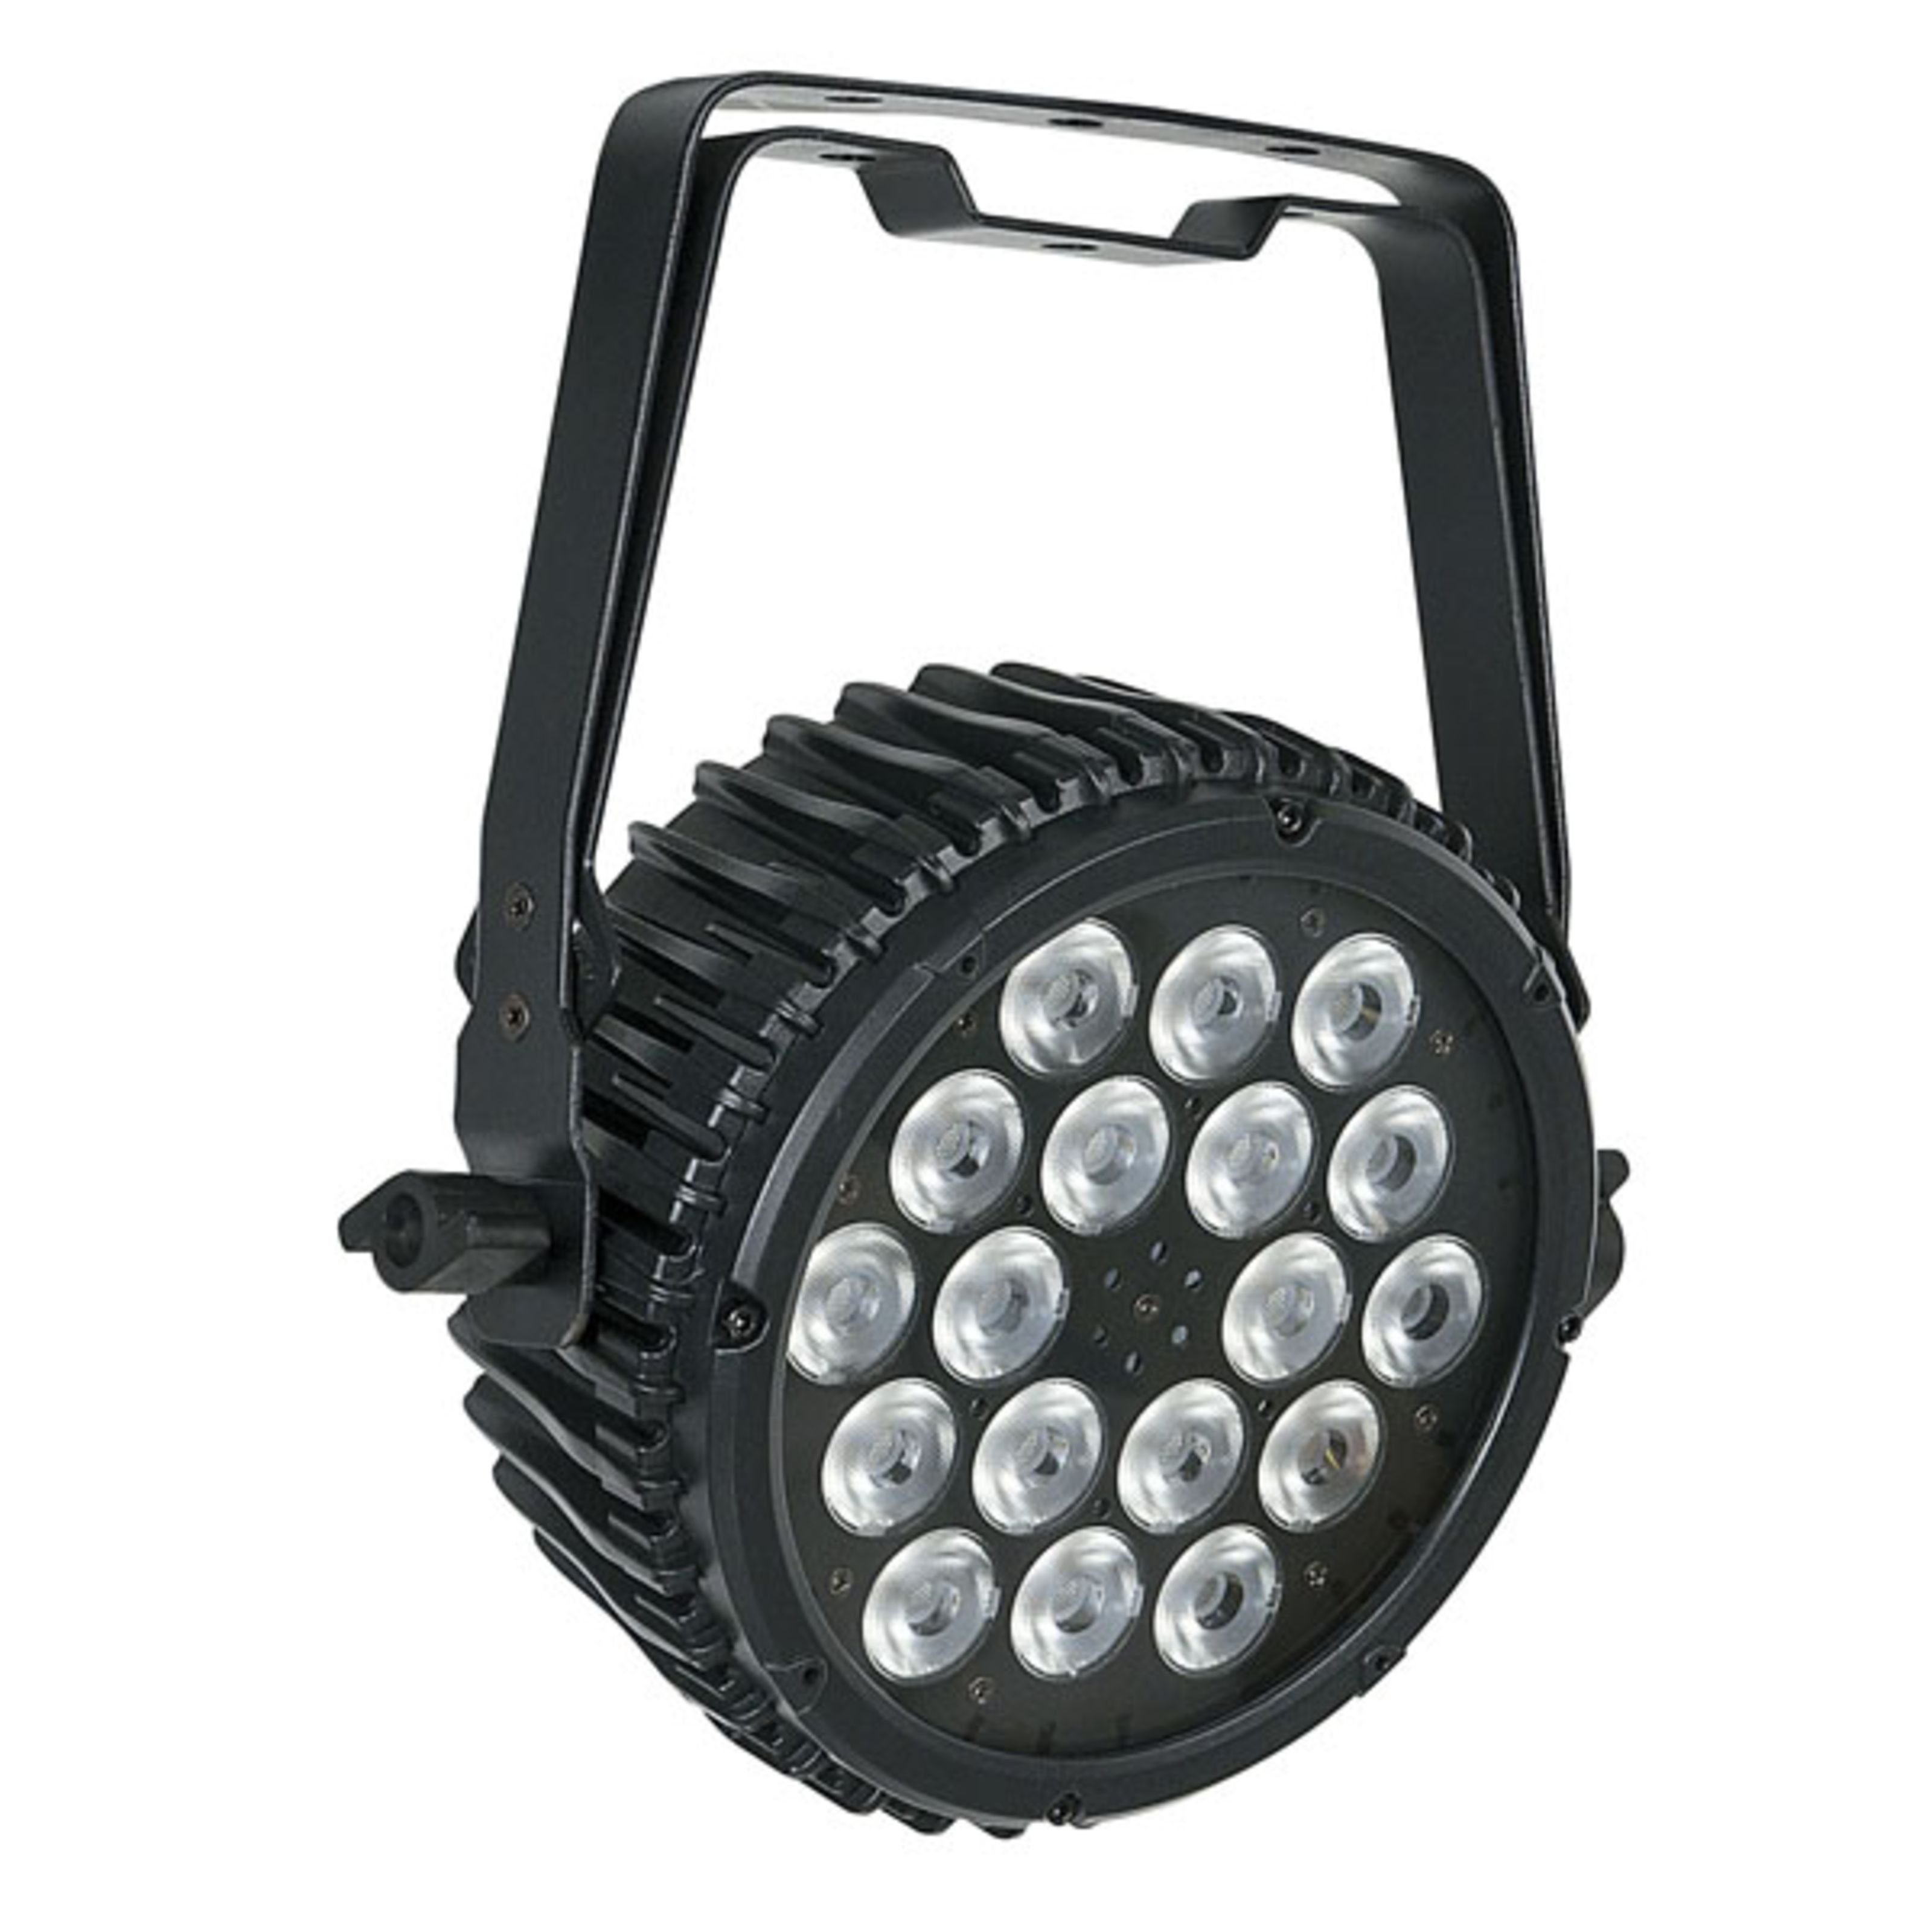 Show tec LED Discolicht, Compact Par 18 MKII Black 18 x 3W RGB-in-1 LED - LED PAR Scheinwerfer